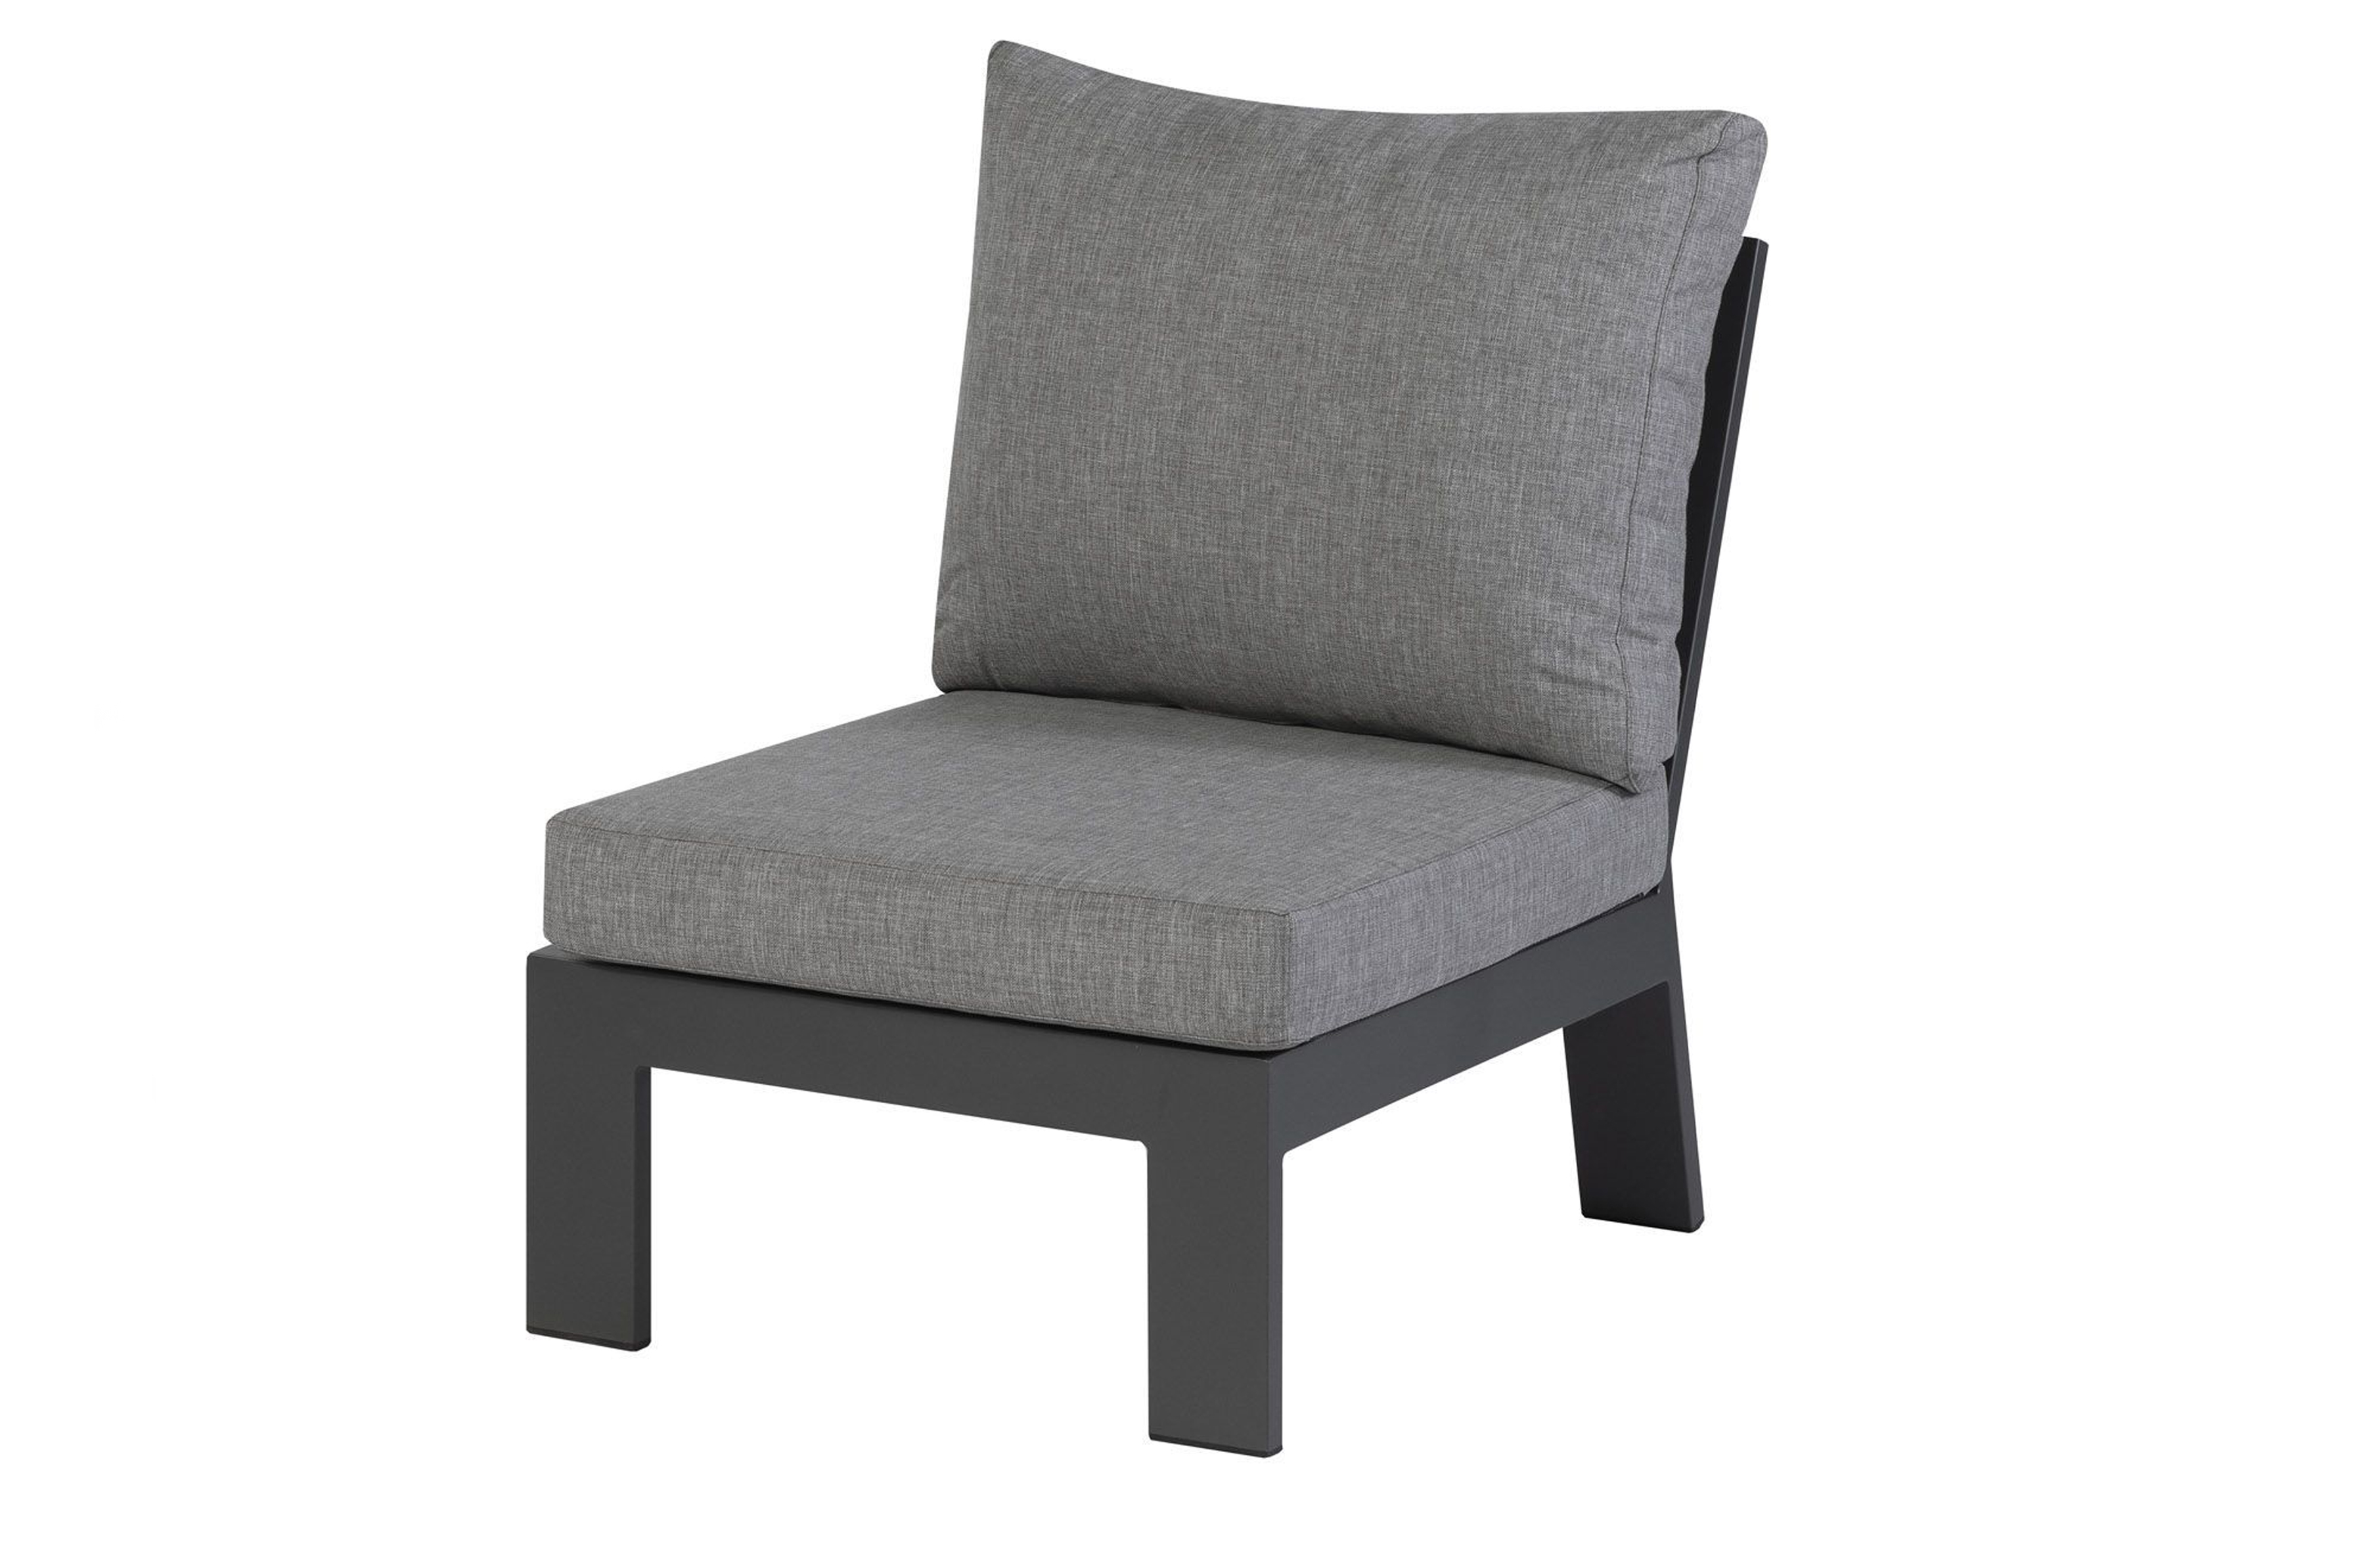 EXOTAN Valerie element loungestol til loungesofa til haven, m. hynder - antracitgrå aluminium